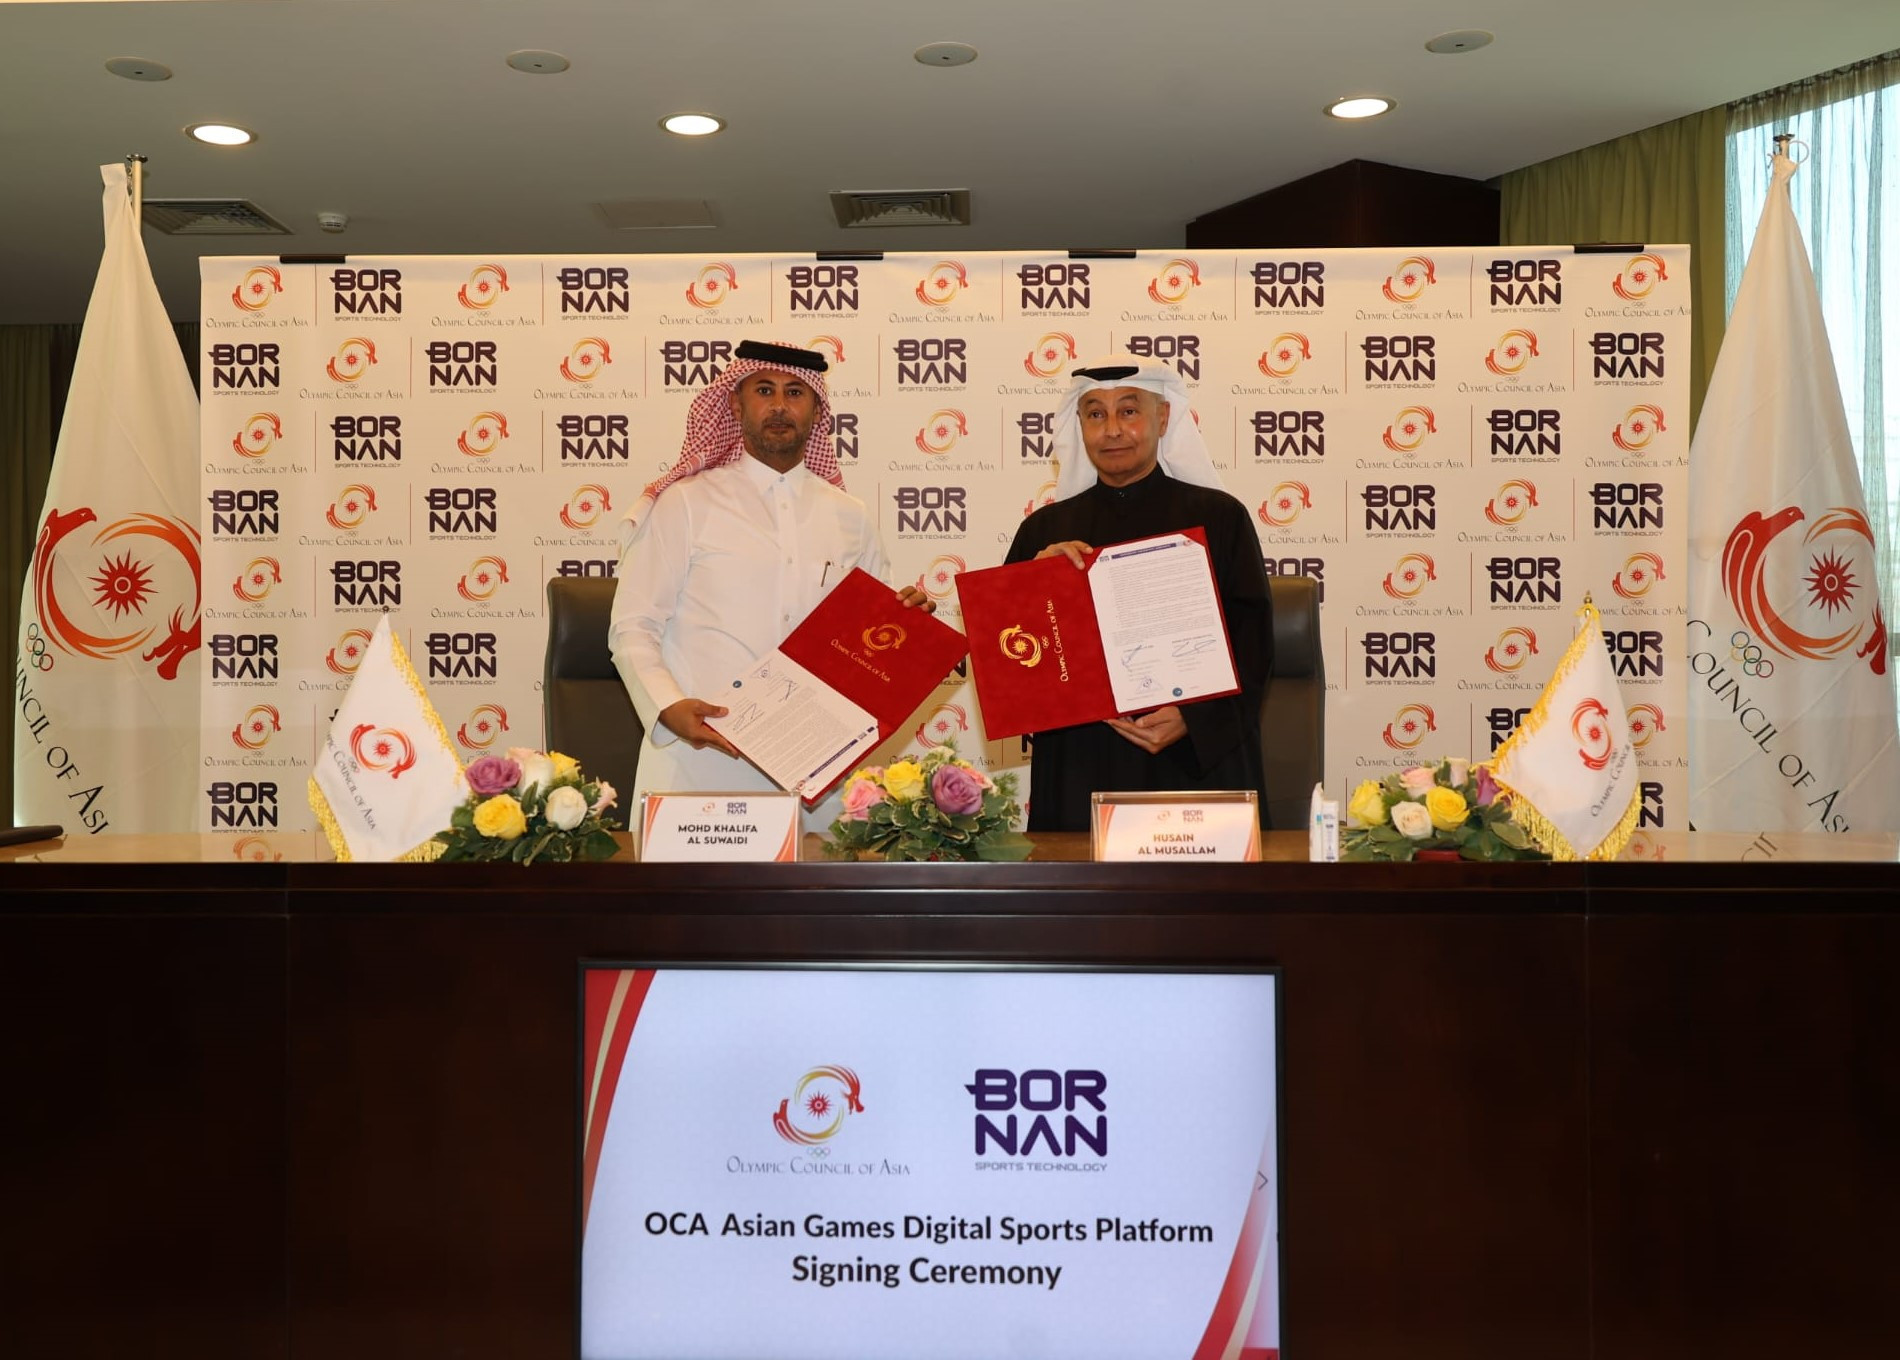 OCA standardises Asian Games IT solutions as Bornan signs on as partner